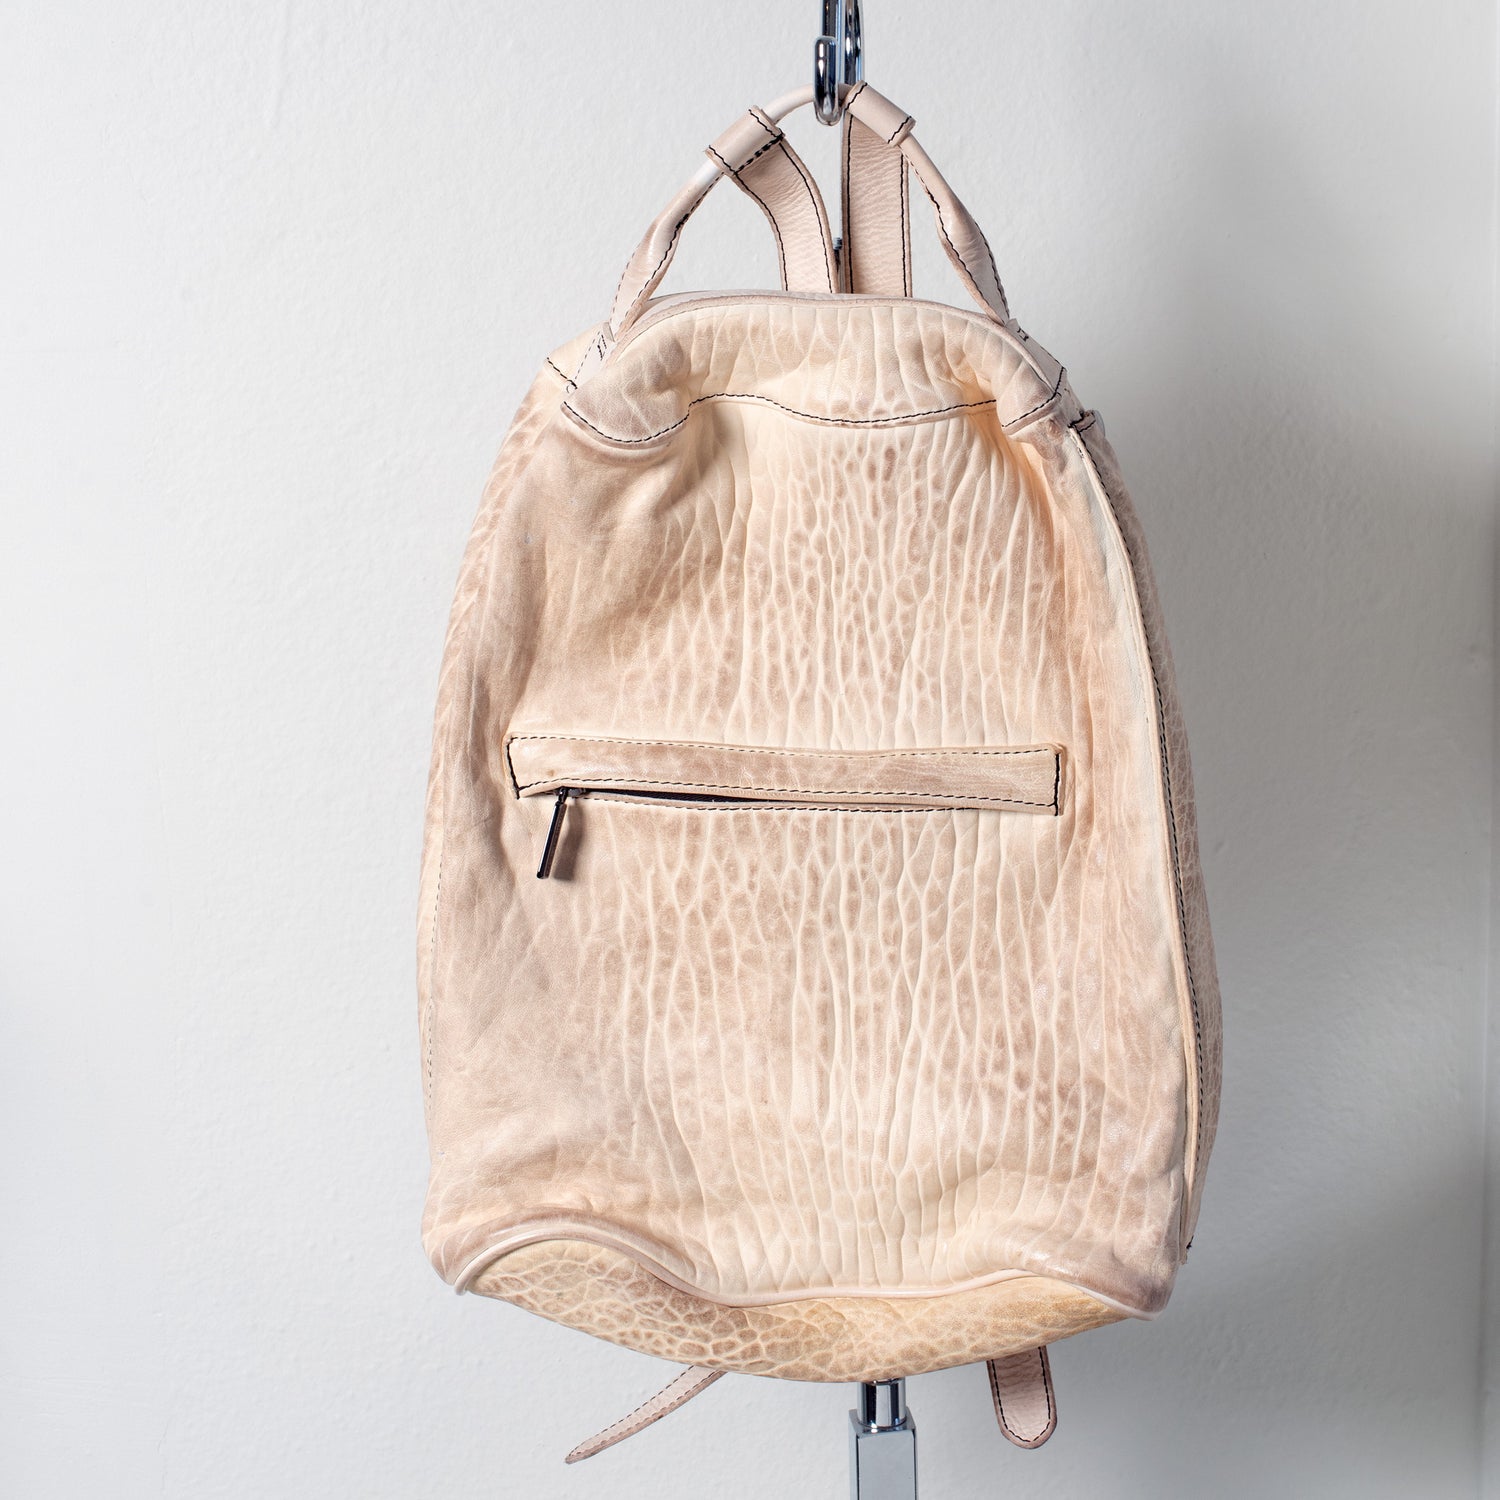 Numero 10 leather backpack for women in creamy vanilla tones. 